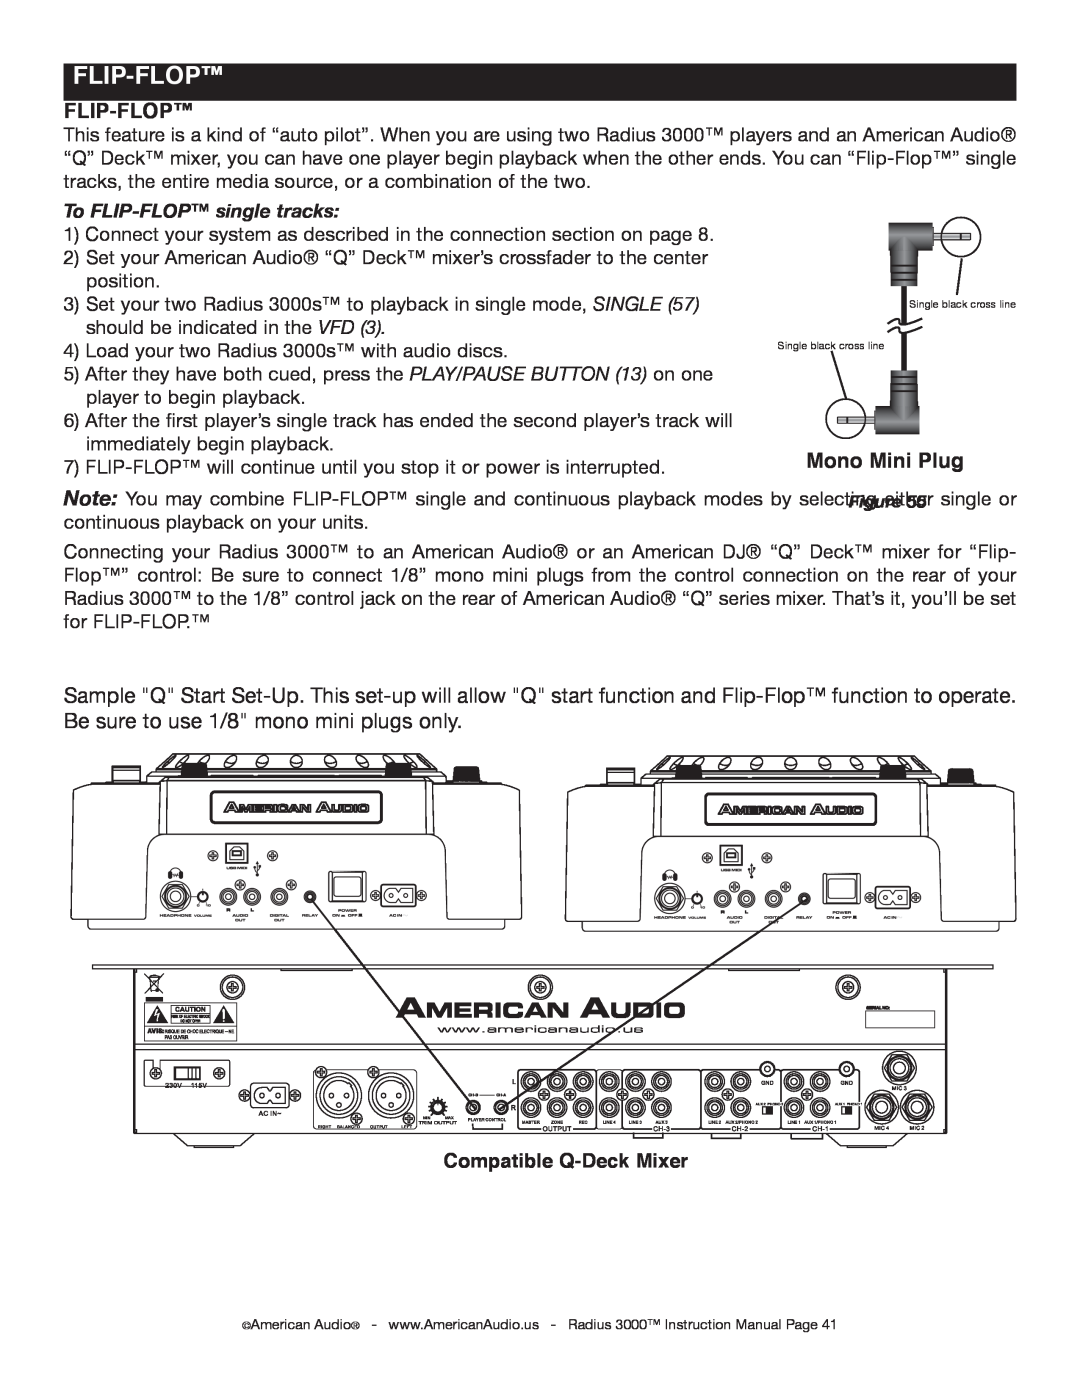 American Audio Radius 3000 manual Flip-Flop, Mono Mini Plug, To FLIP-FLOPsingle tracks, Compatible Q-DeckMixer 